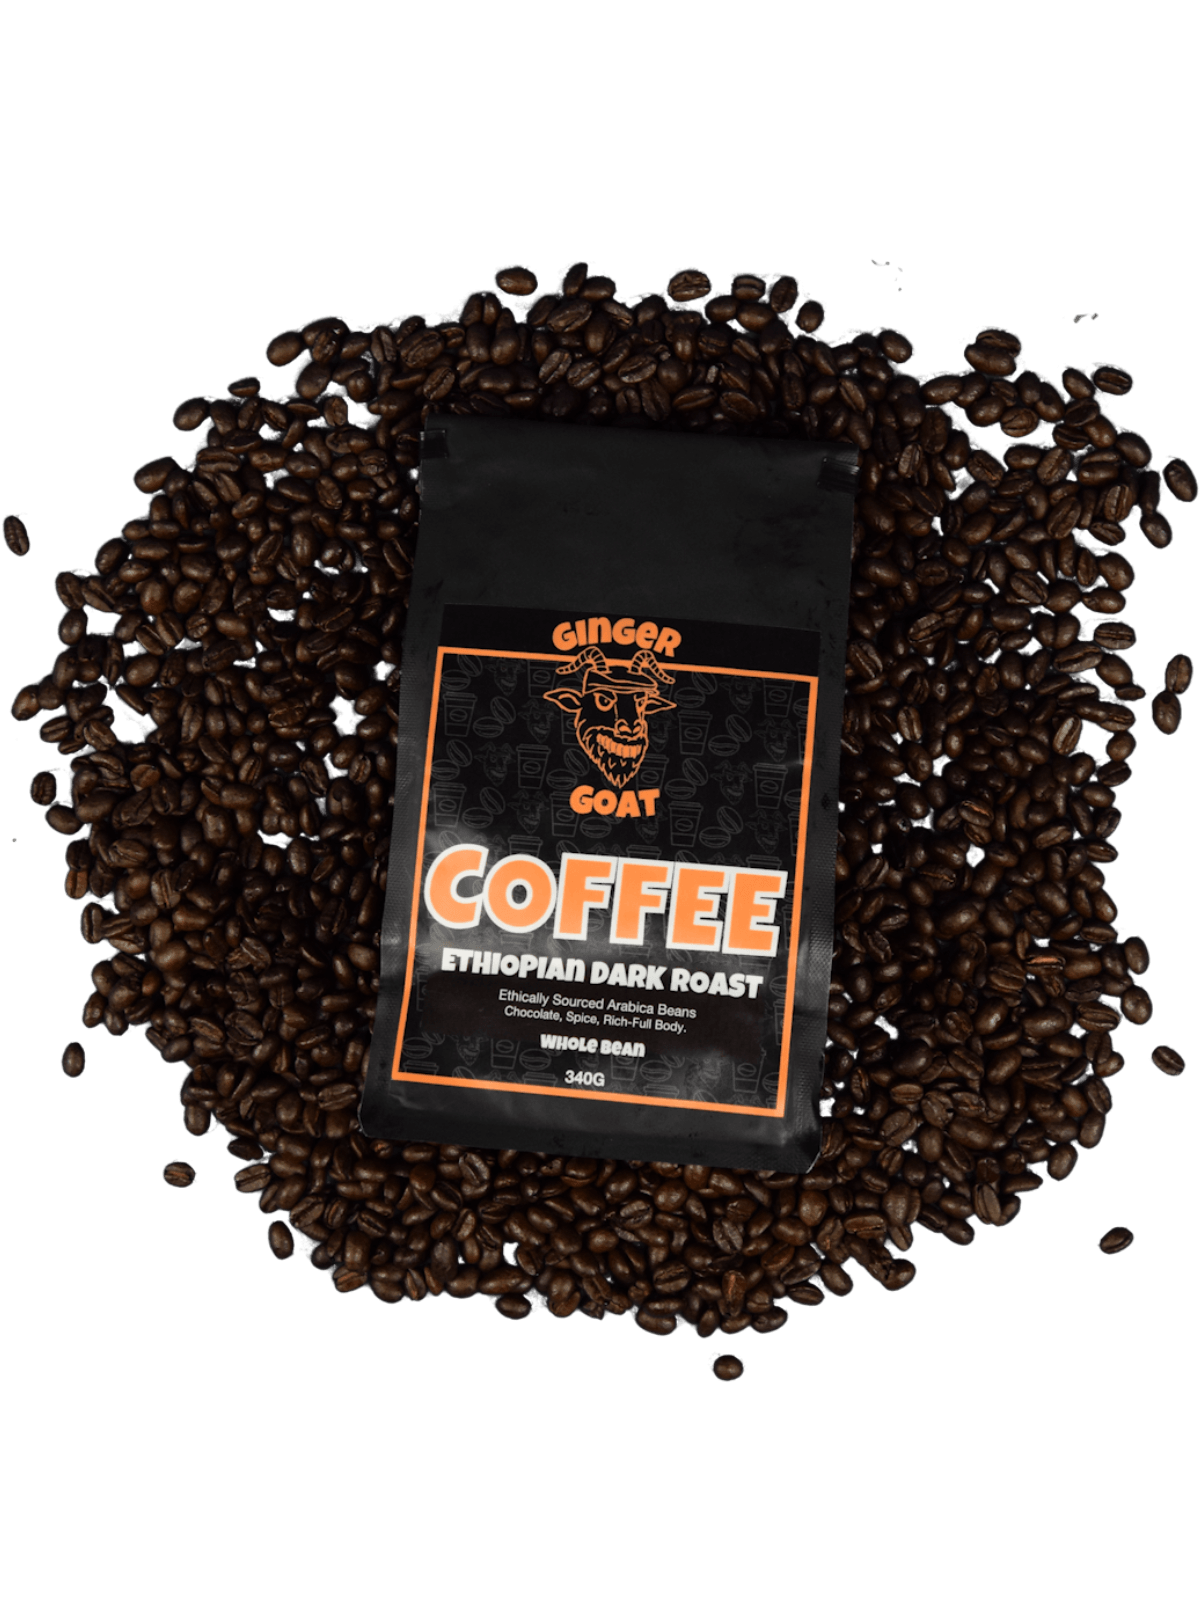 Coffee & Snacks - Ginger Goat